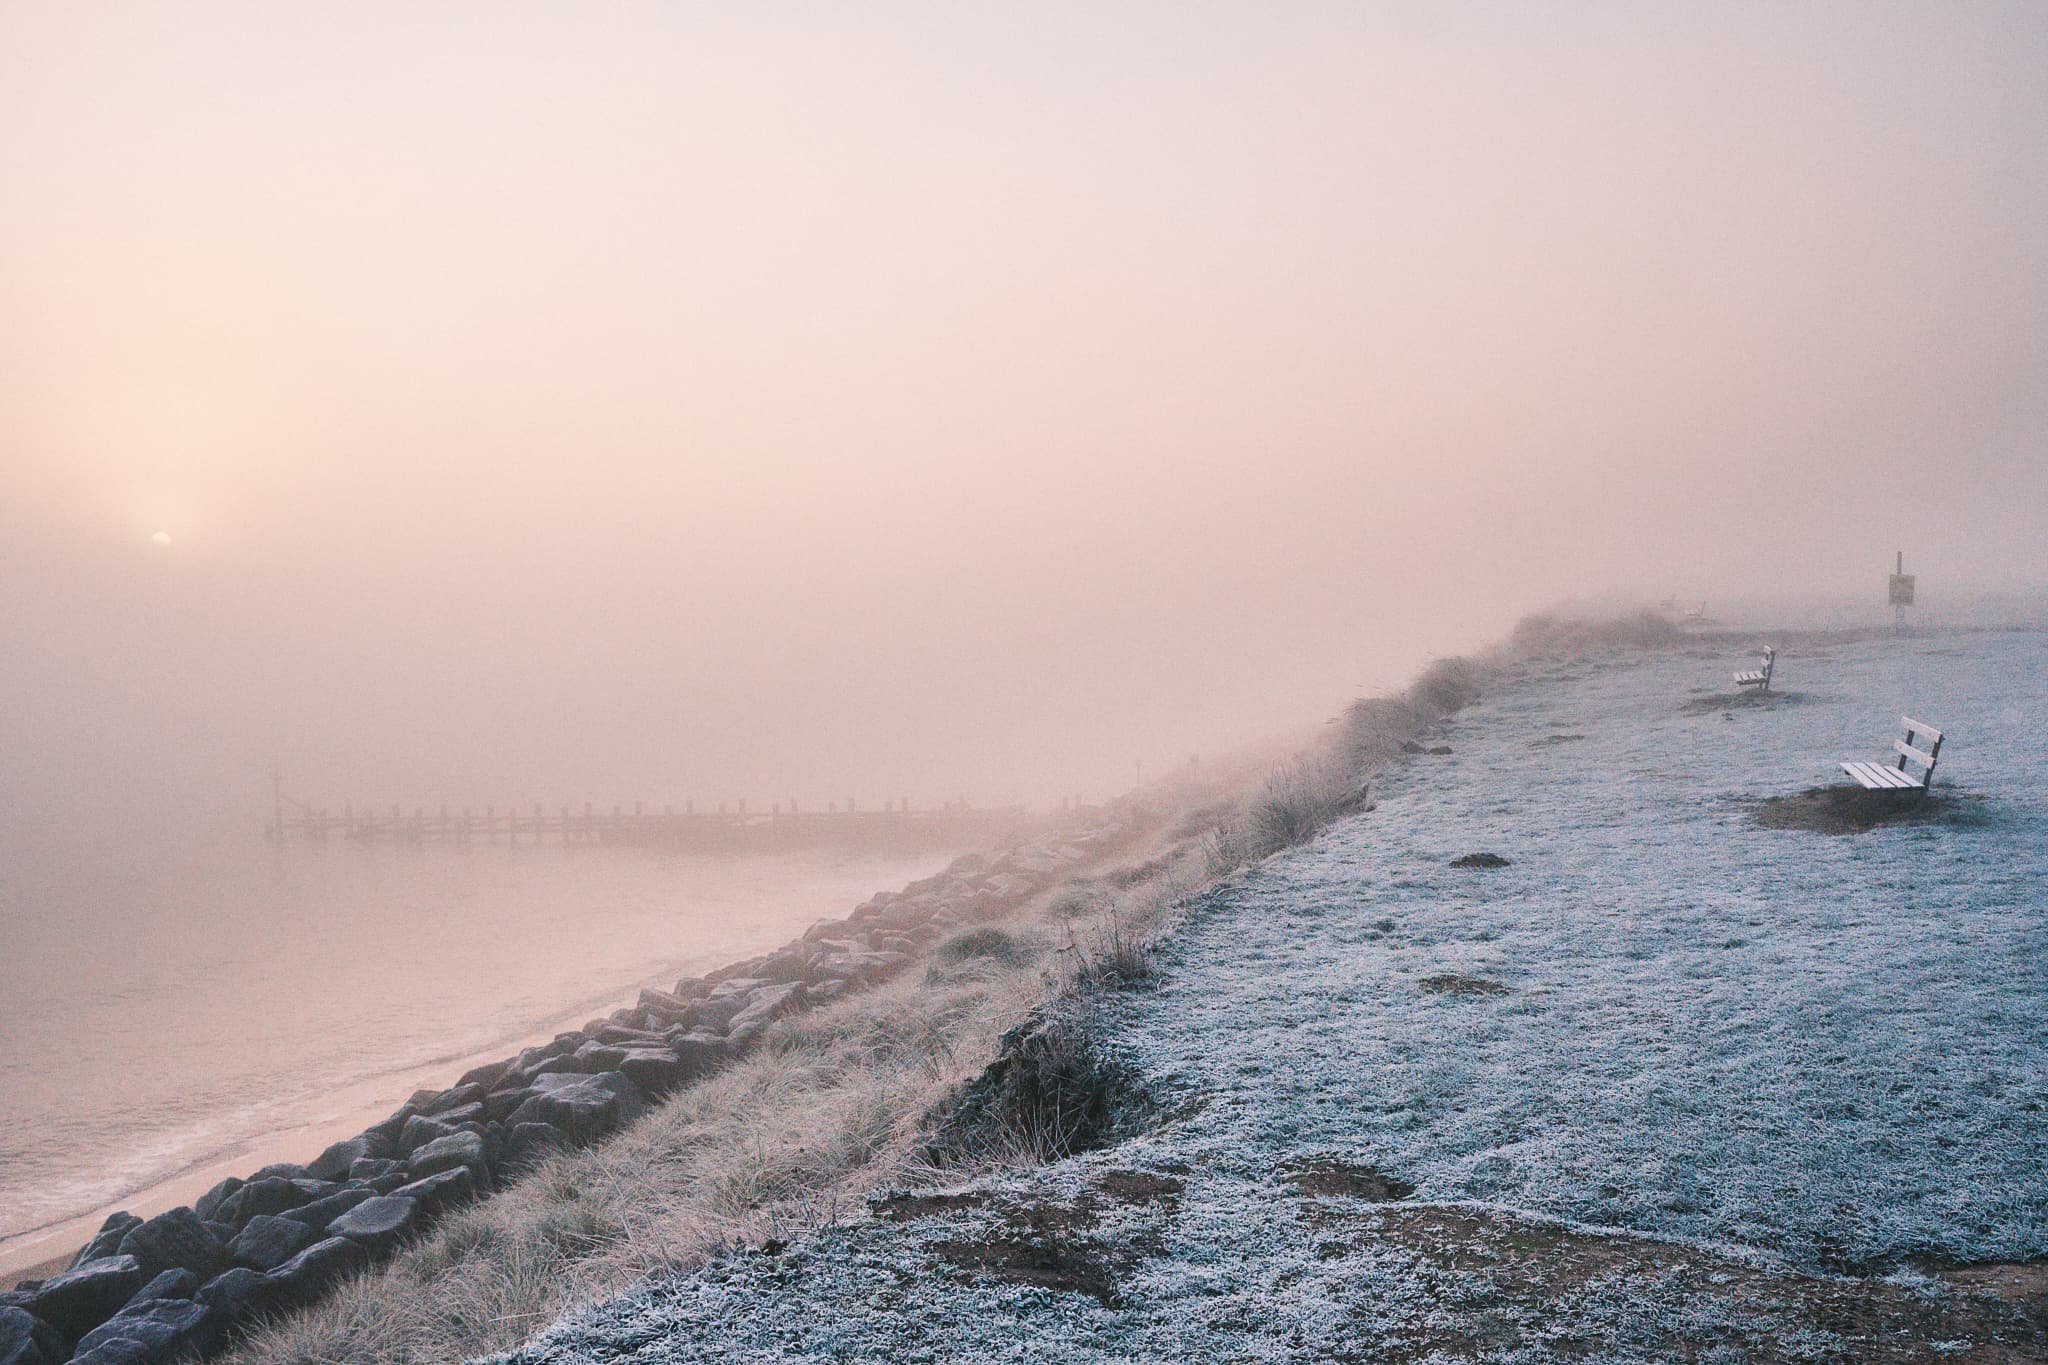 benches facing the early morning fog over Hopton beach